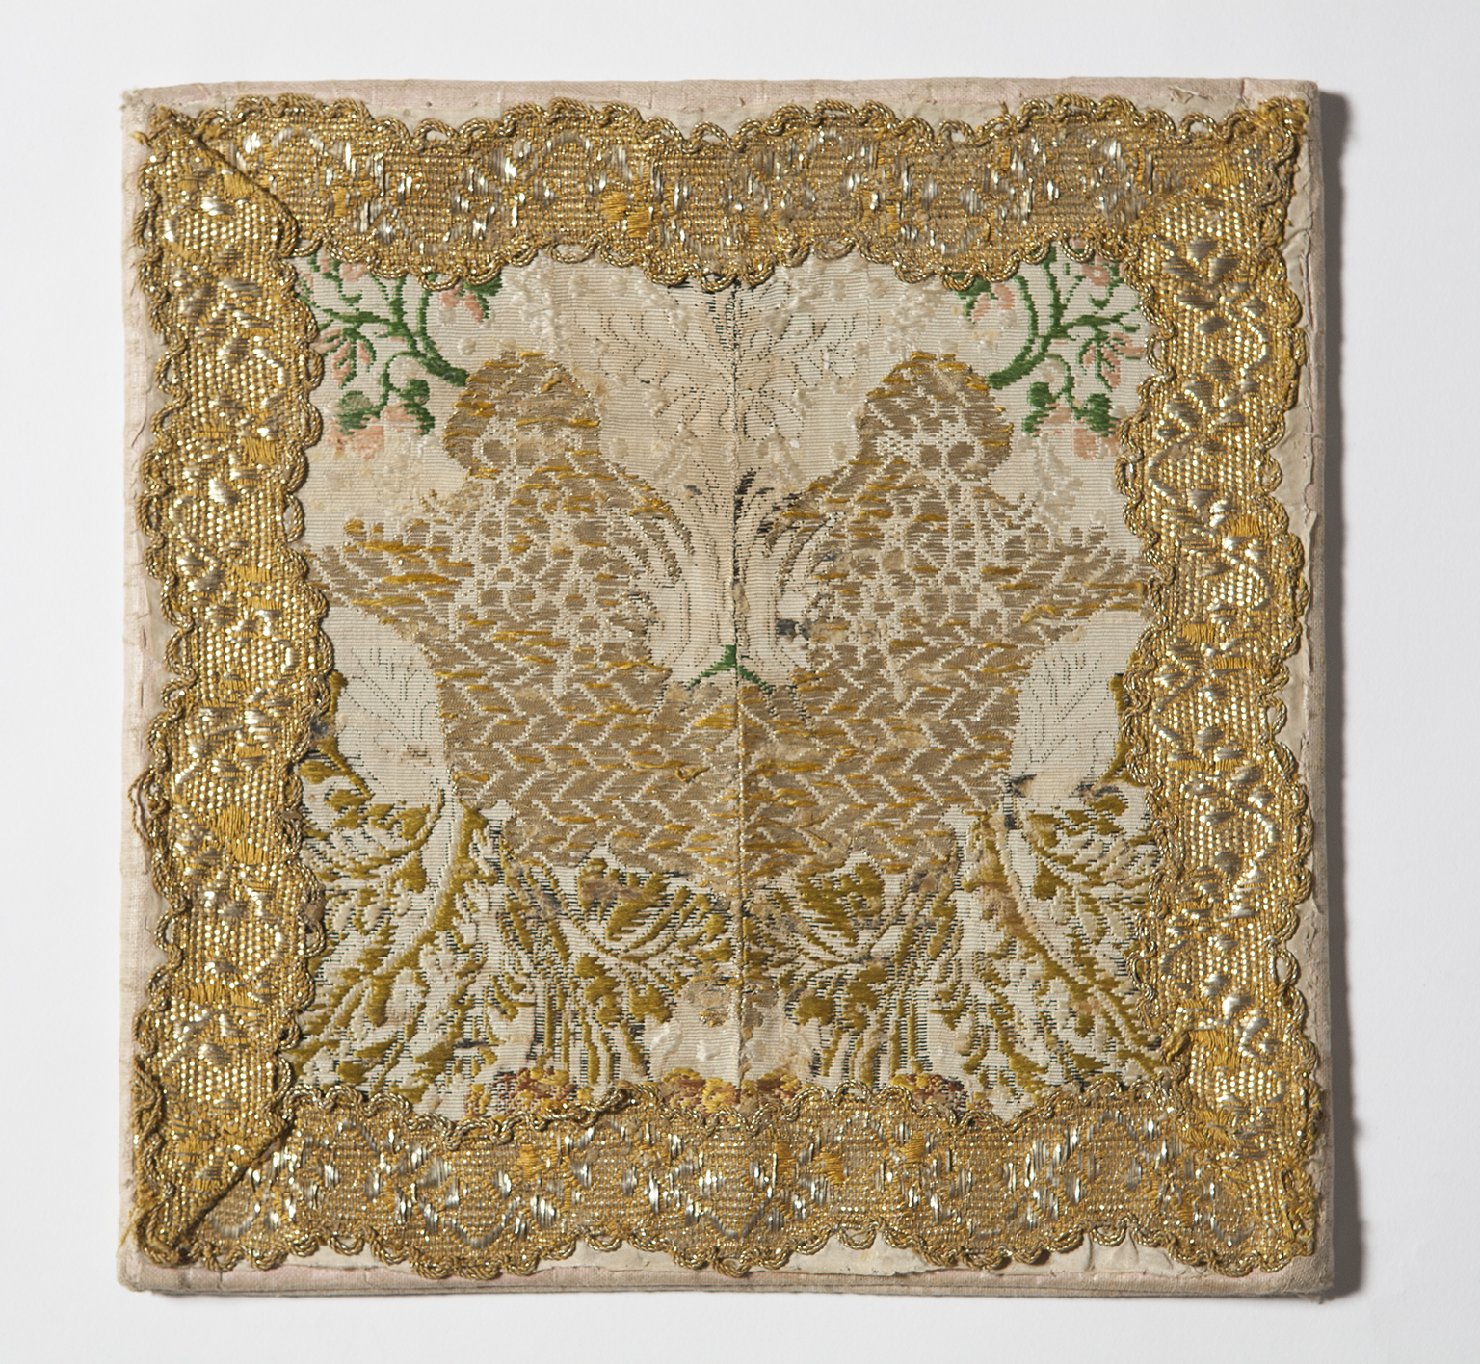 motivi decorativi floreali, motivi decorativi geometrici (borsa del corporale, opera isolata) - manifattura veneziana (metà sec. XVIII)